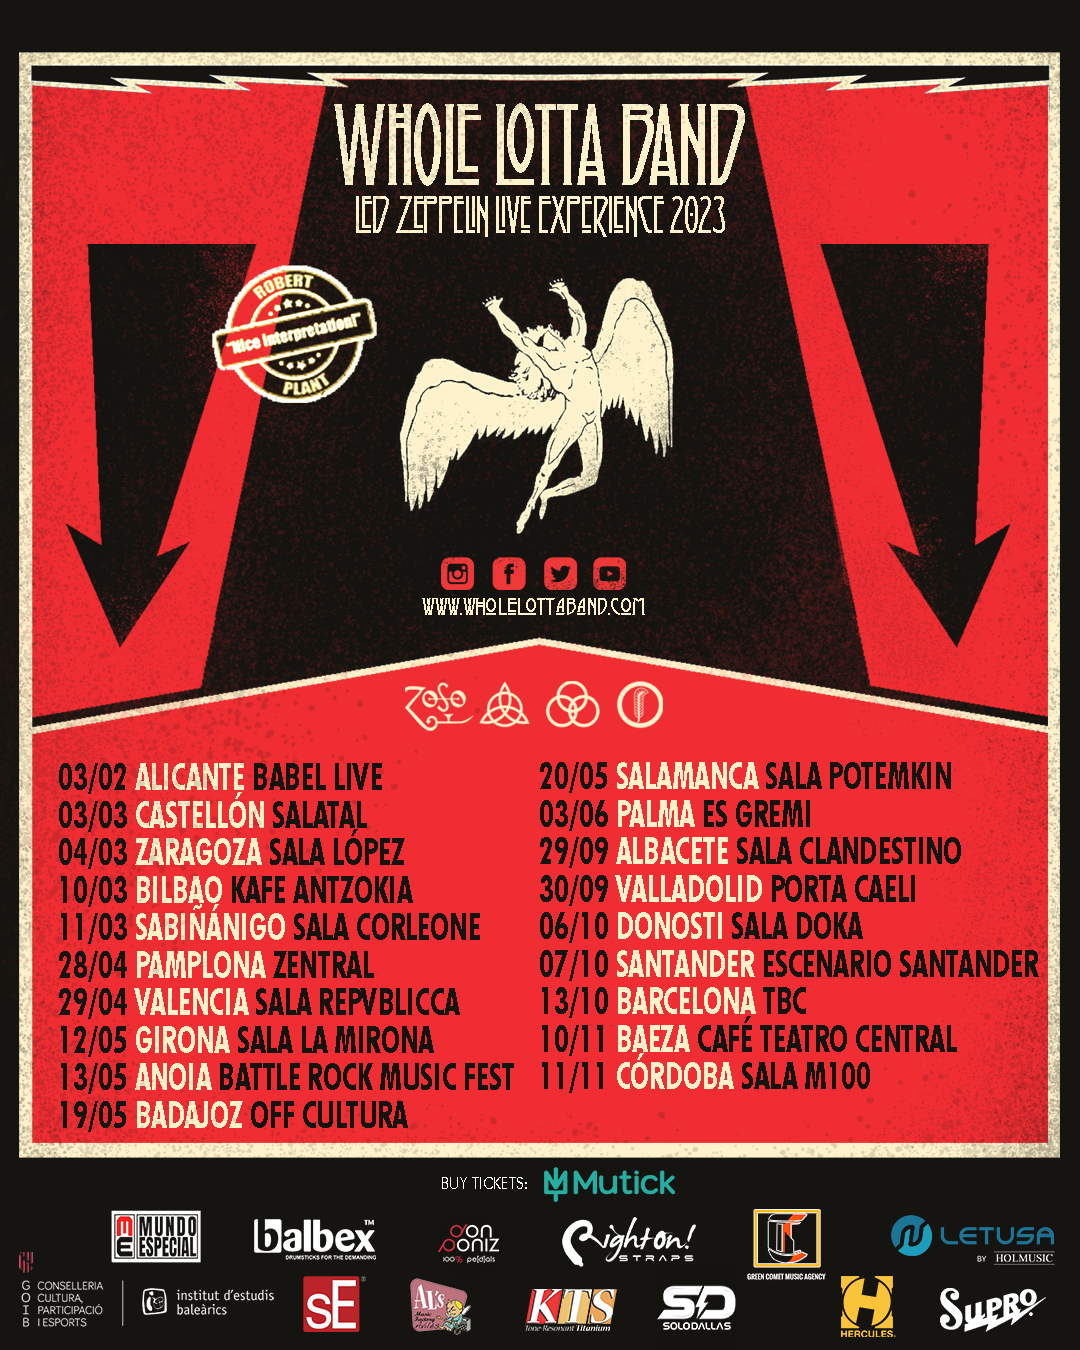 Whole Lotta Band - Led Zeppelin Live Experience en Girona - Mutick